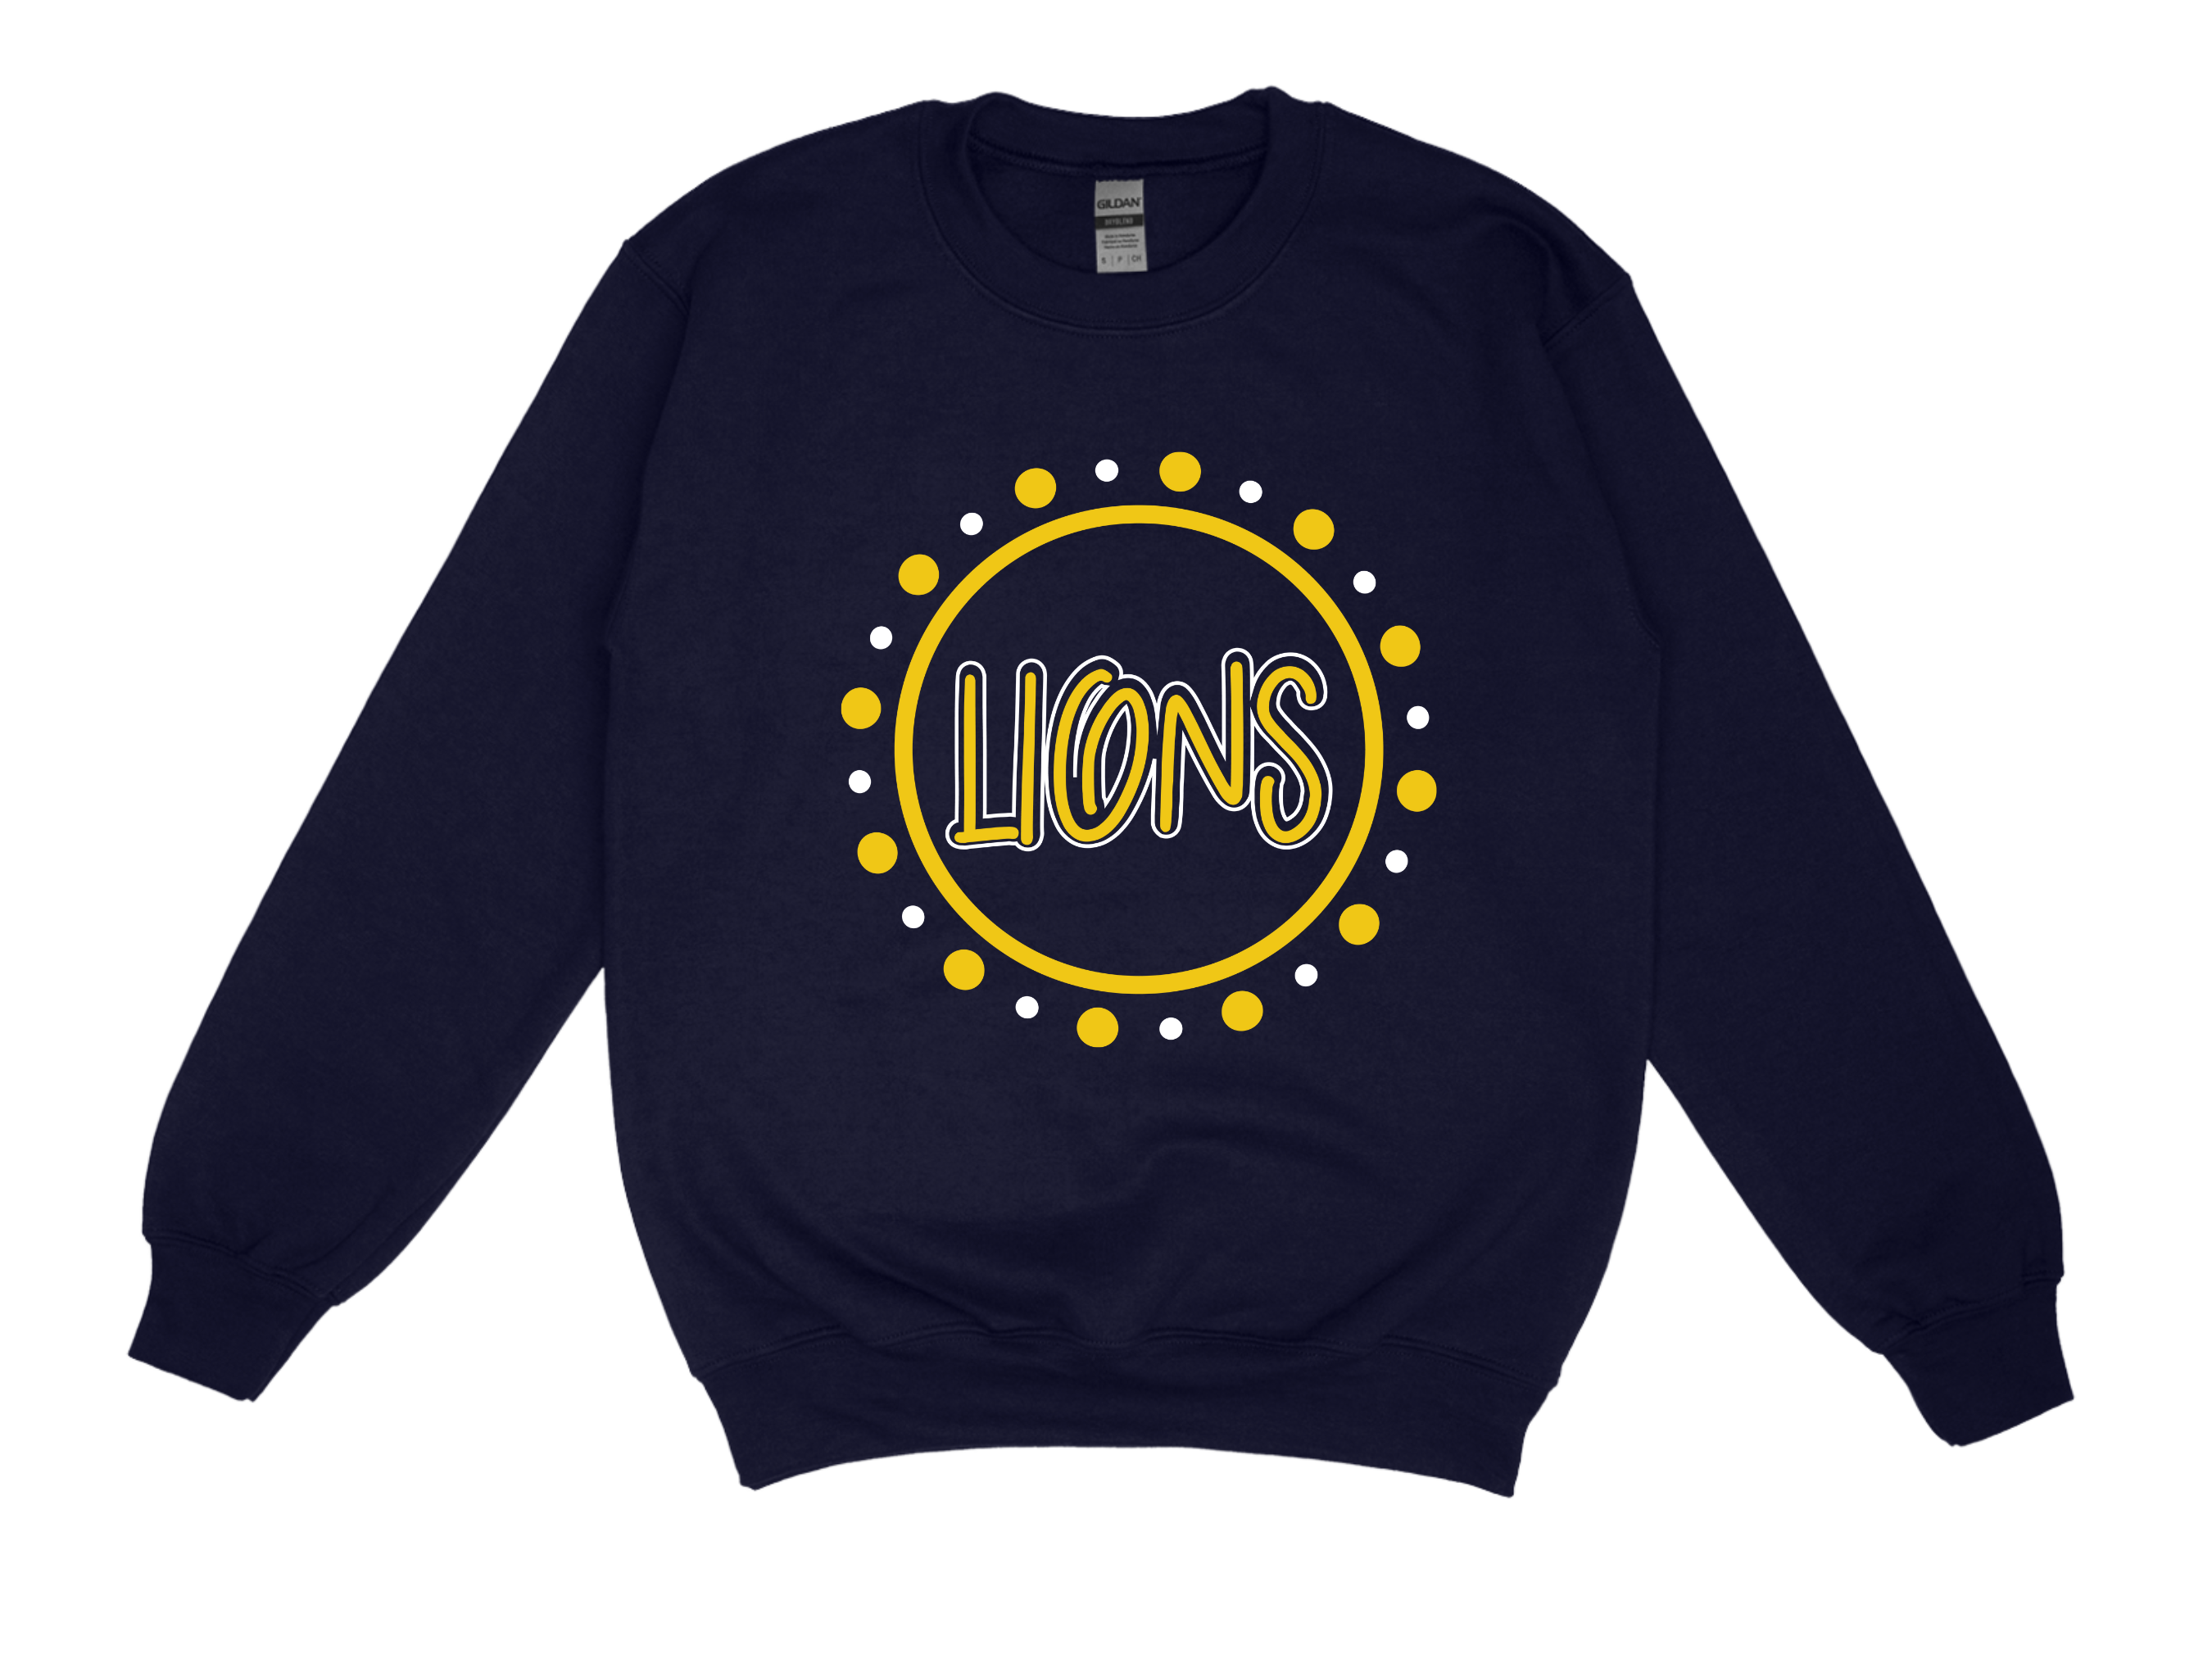 ((Lions)) - Navy Sweatshirt  Large Image